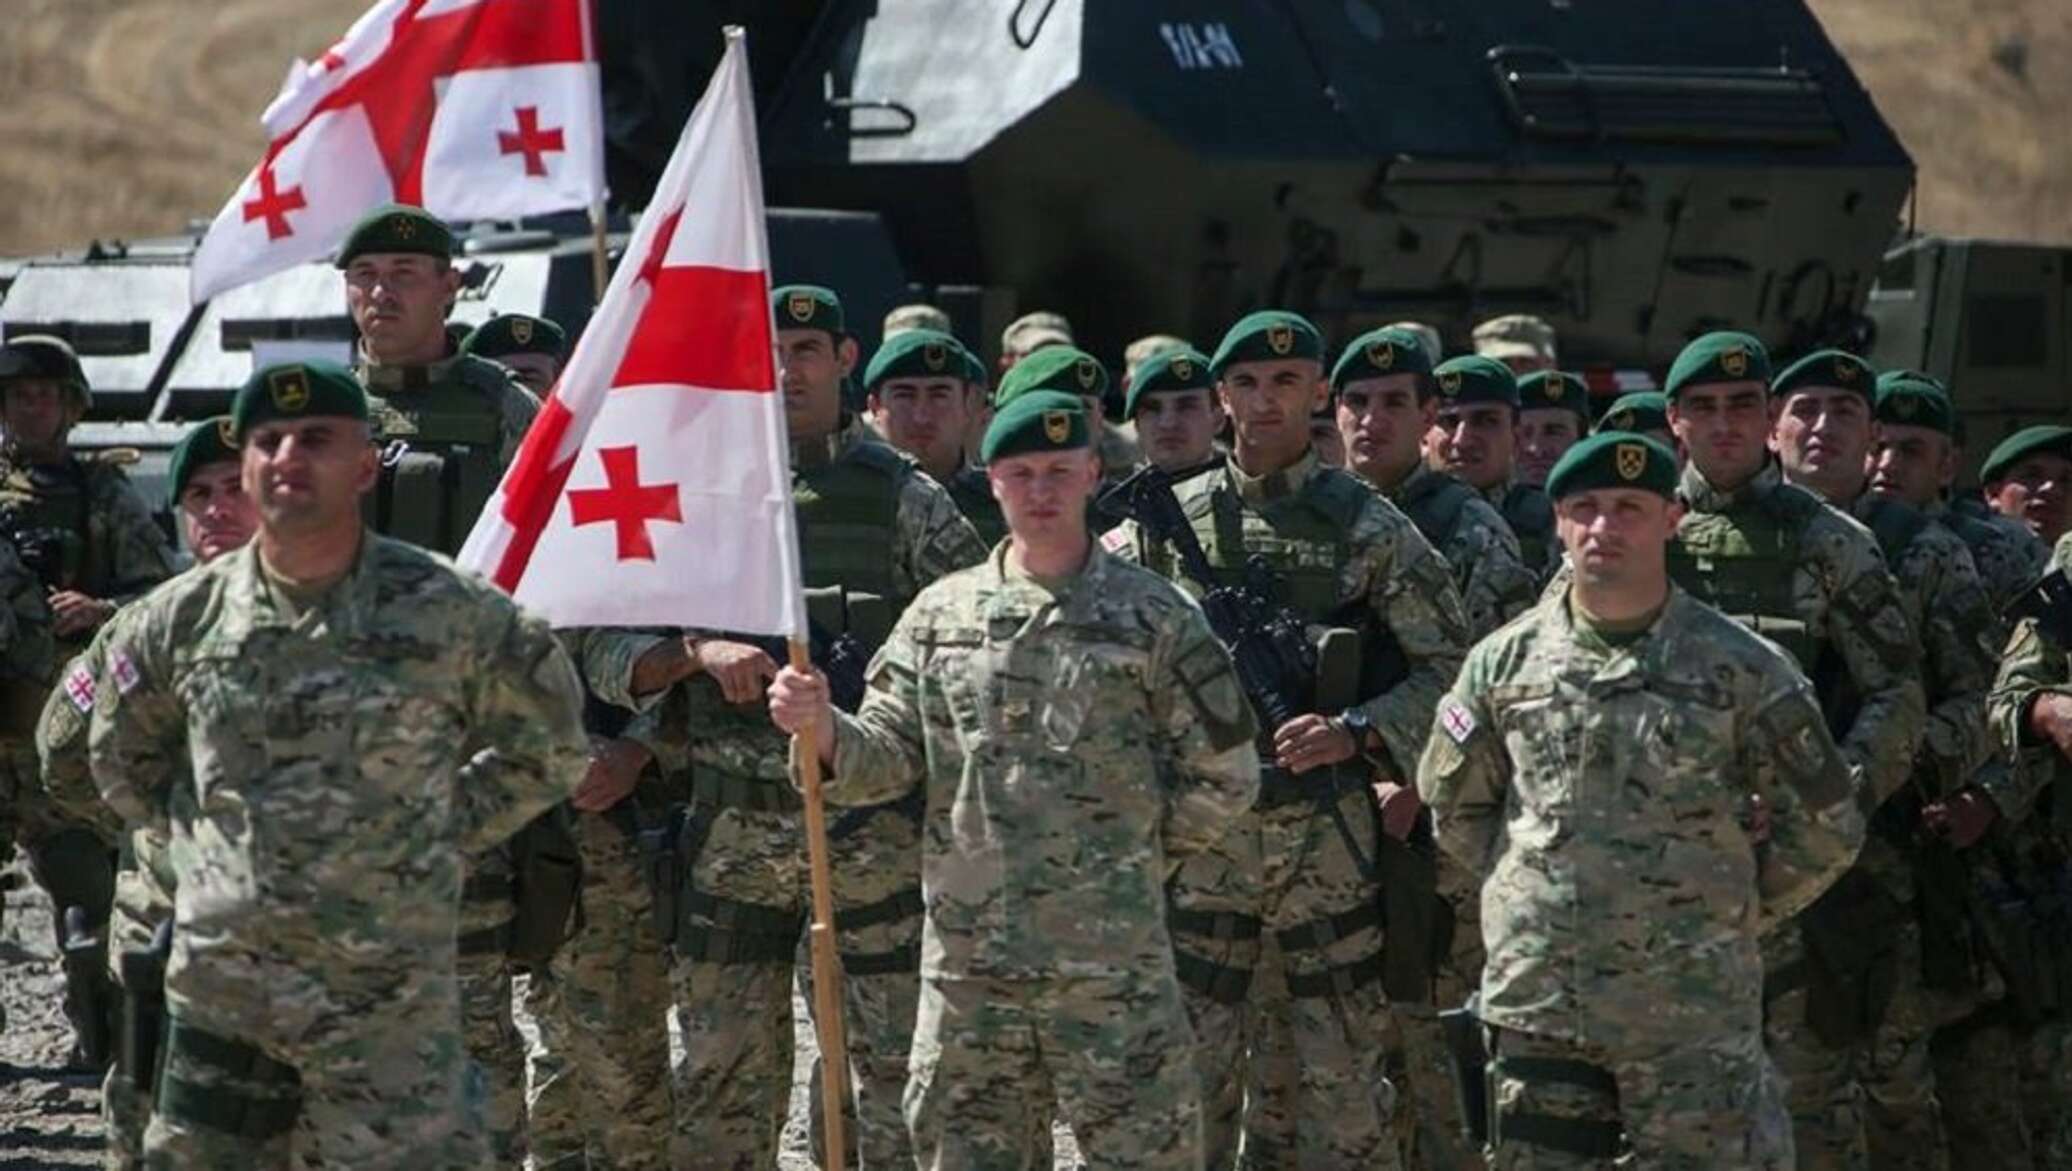 Оборона грузии